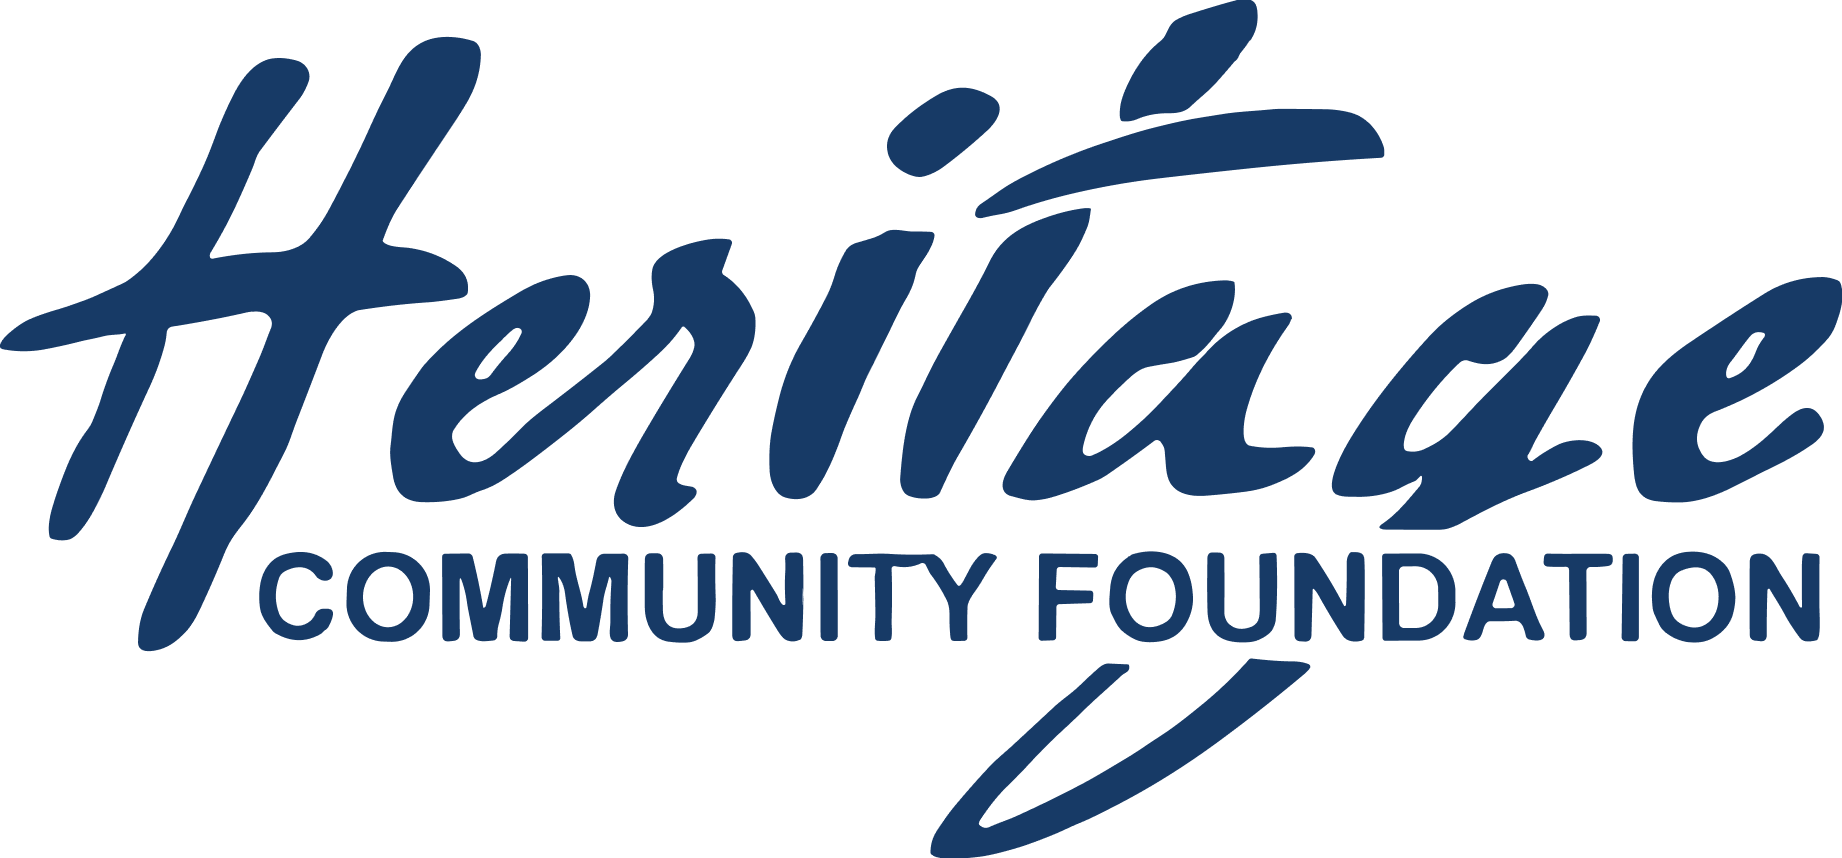 Logo for Heritage Community Foundation on a transparent background